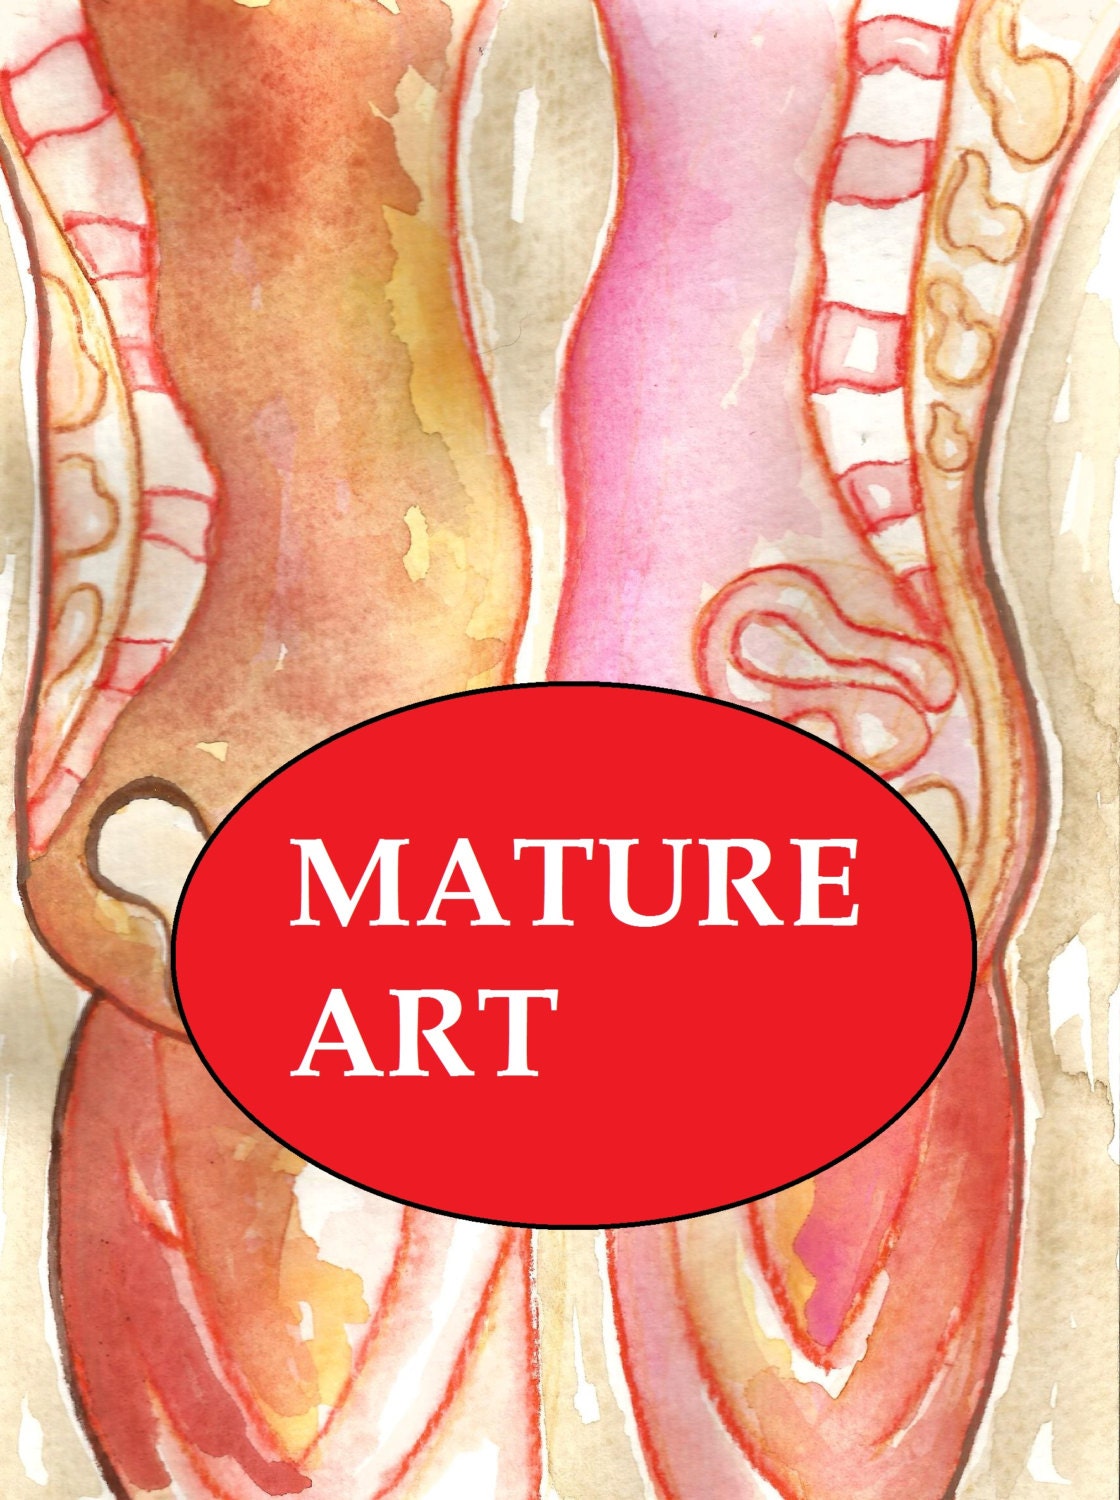 Anatomy Of Sexual Intercourse 49